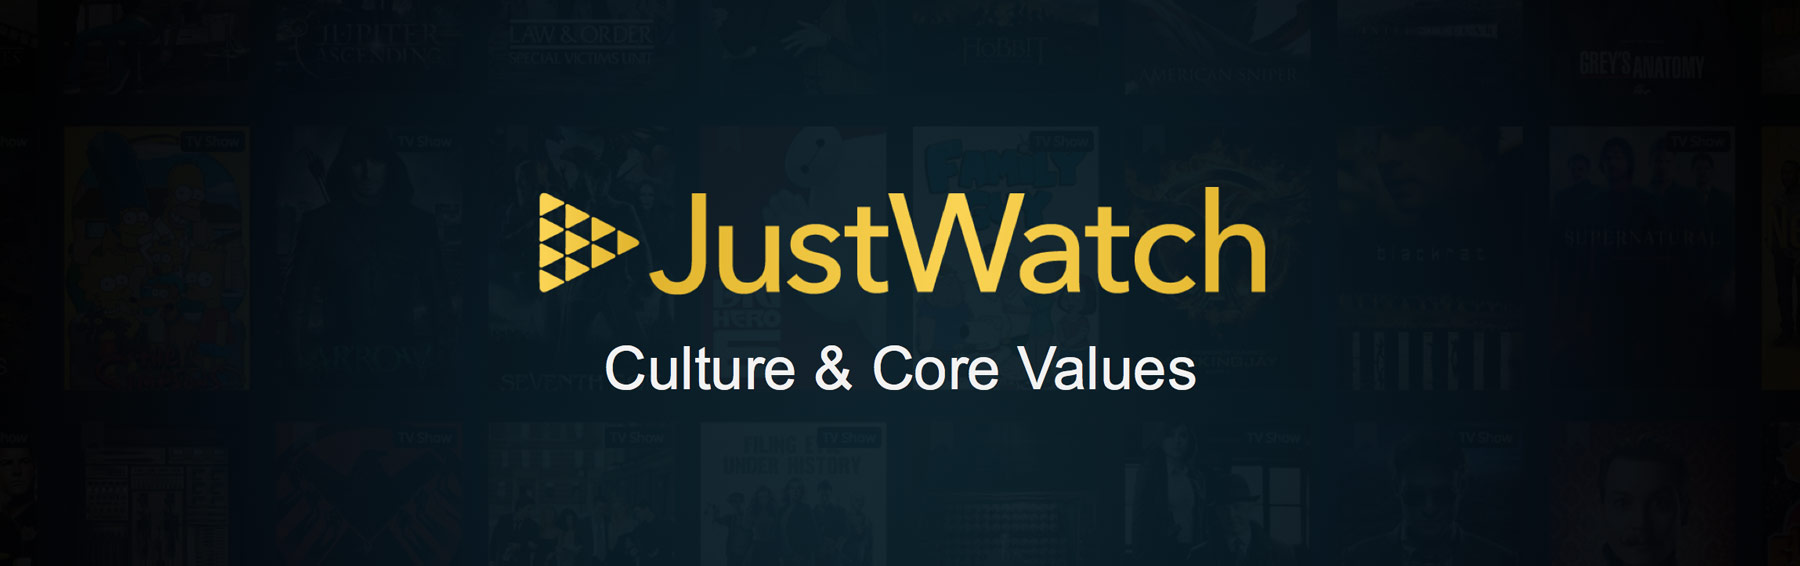 JustWatch - Culture & Core Values